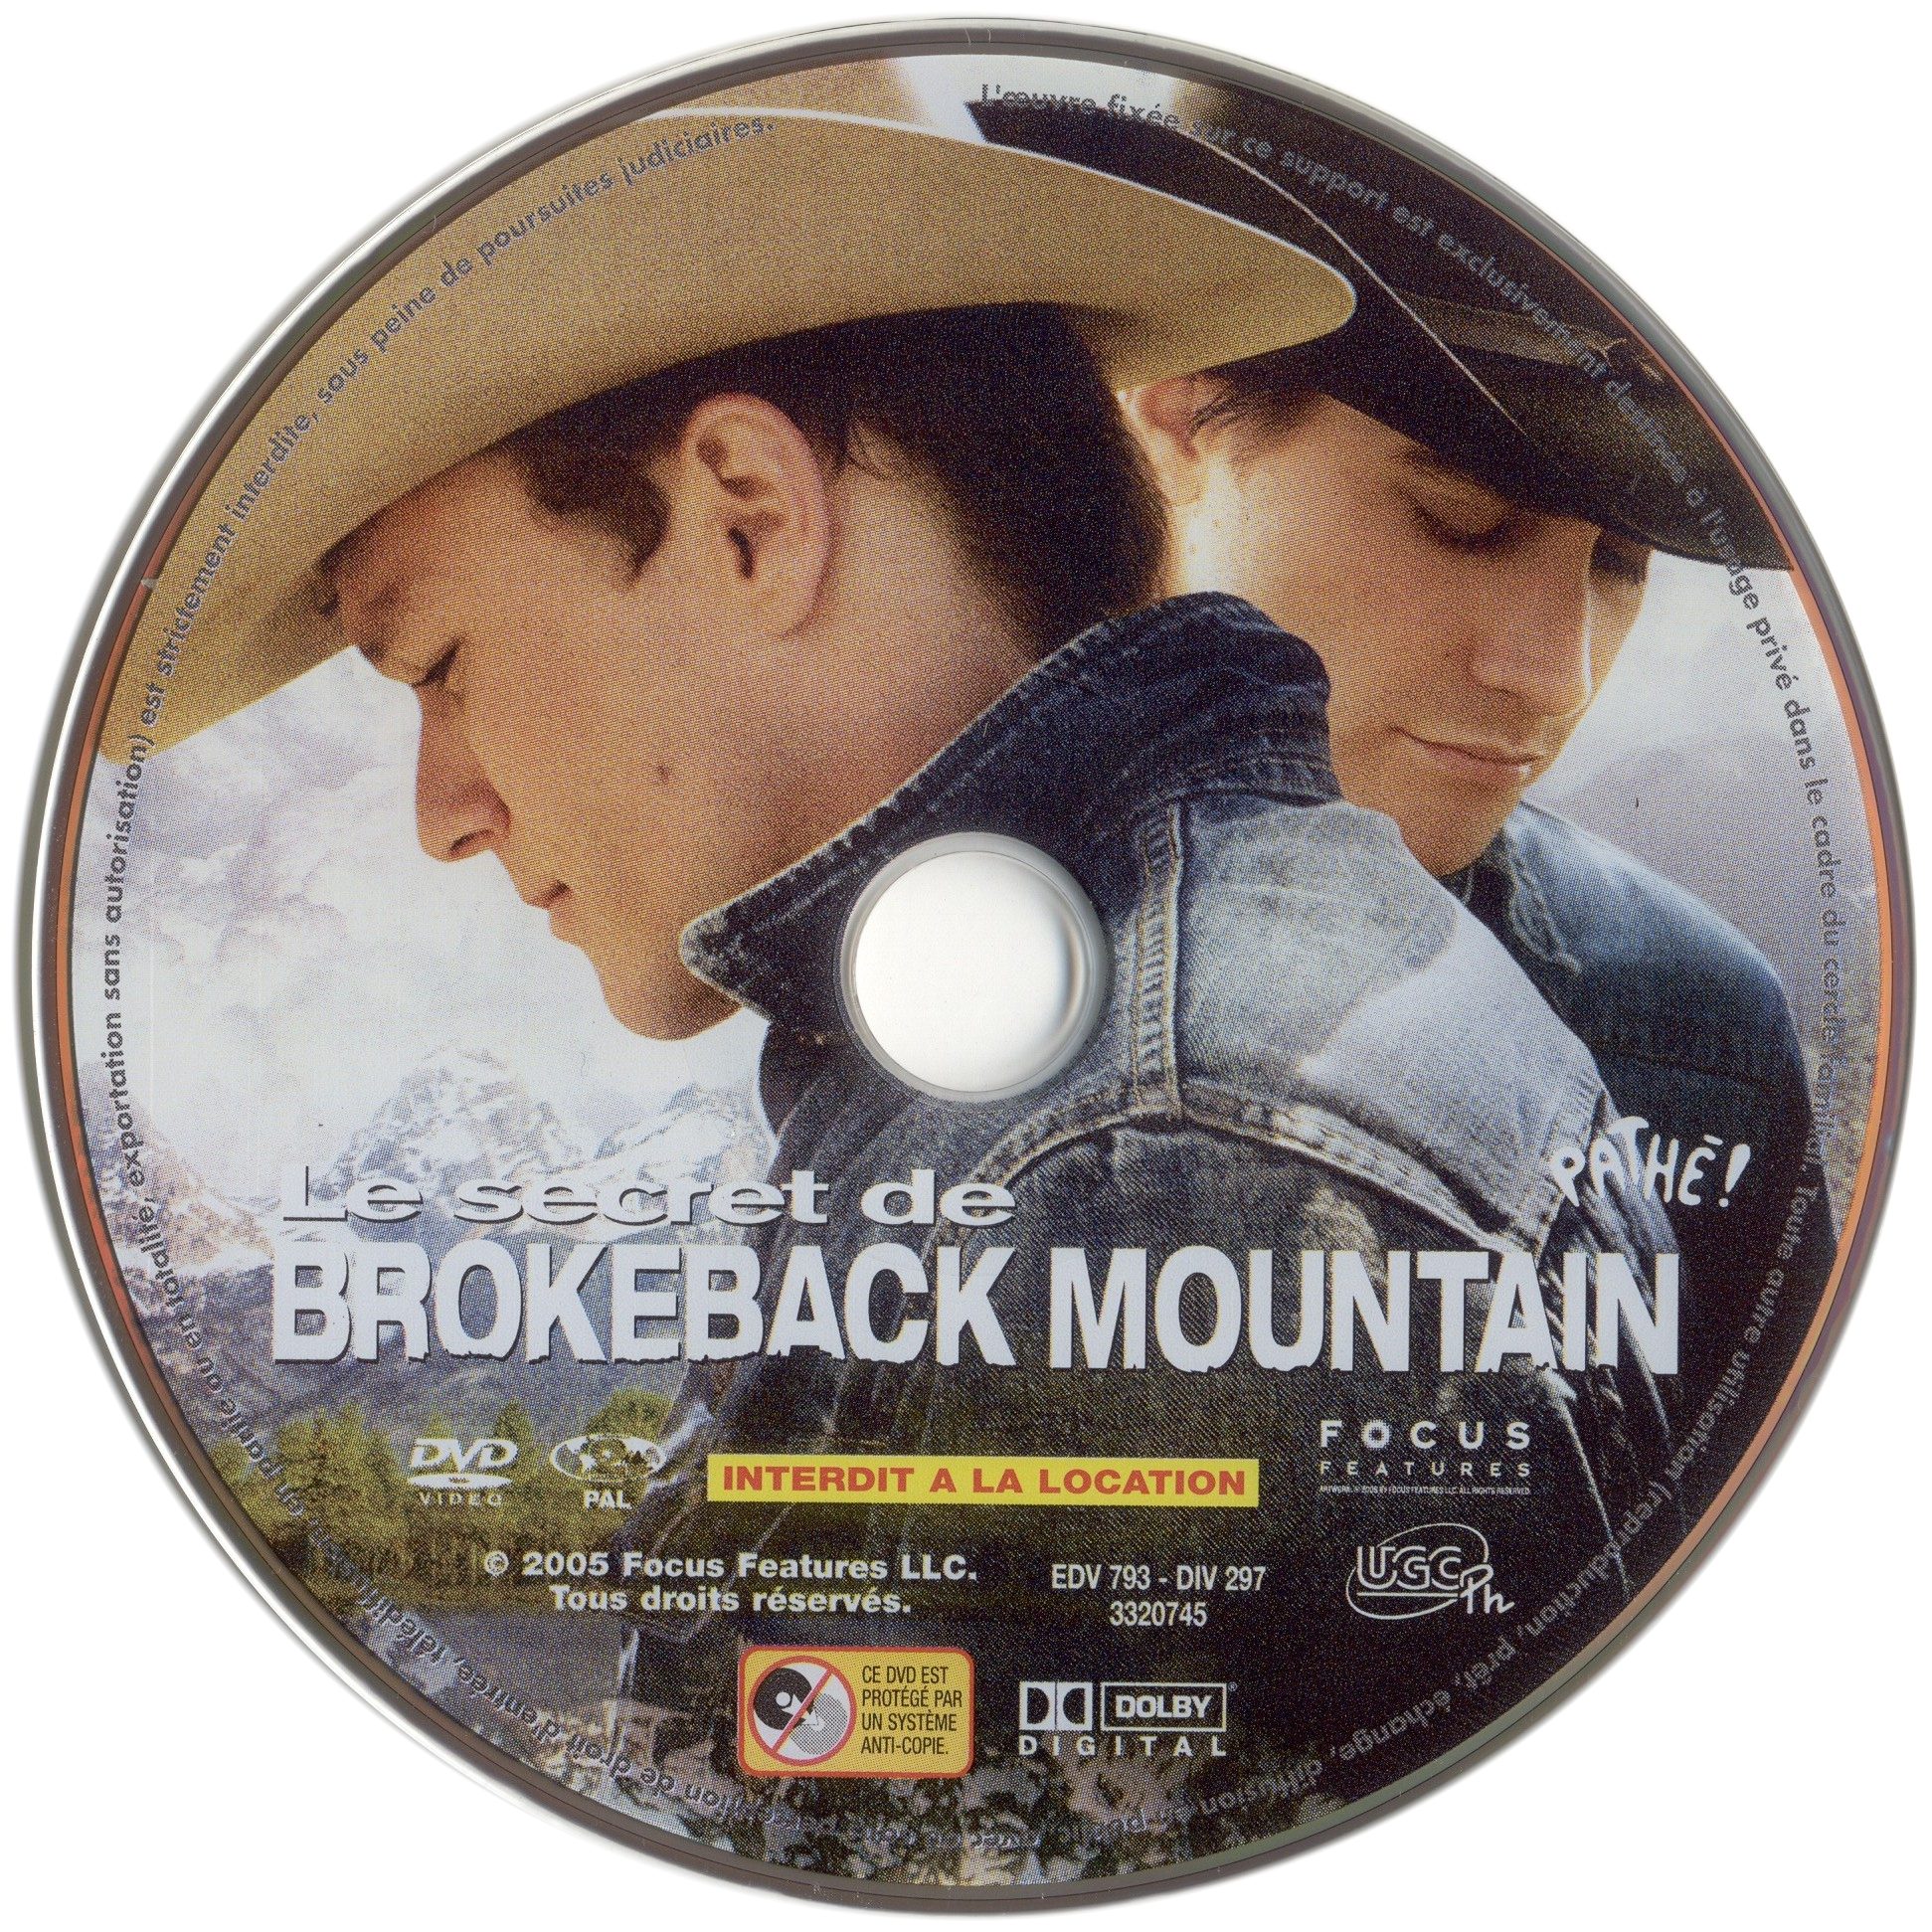 Le secret de brokeback mountain